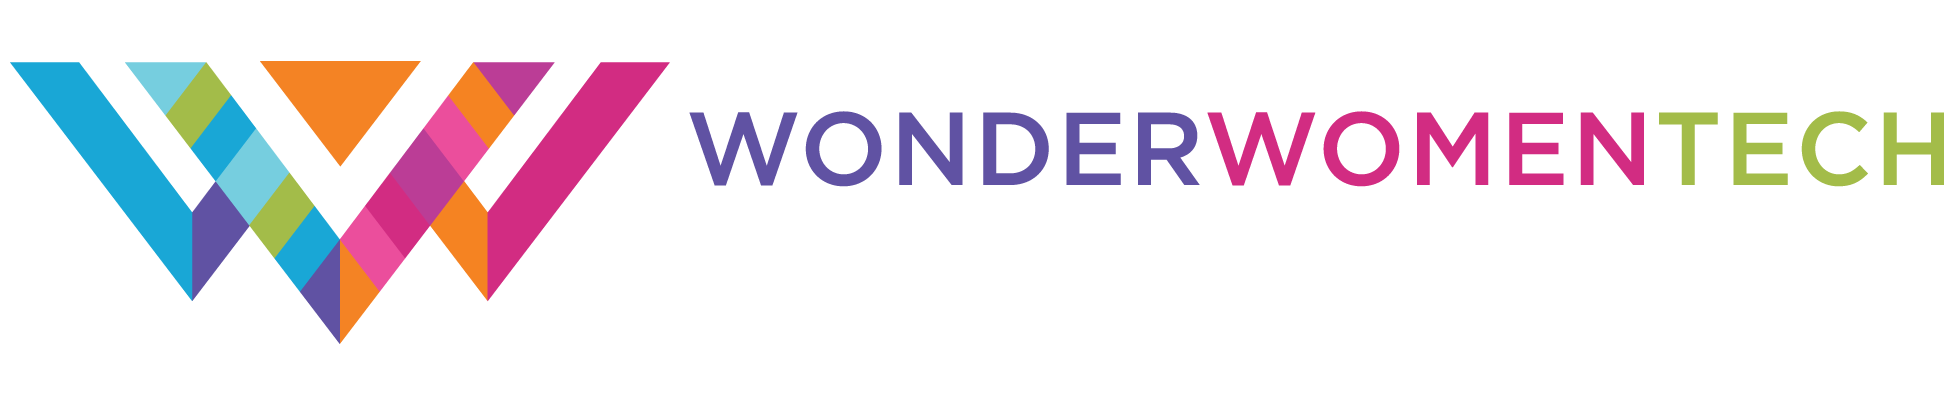 Our Programs - The Wonder Women